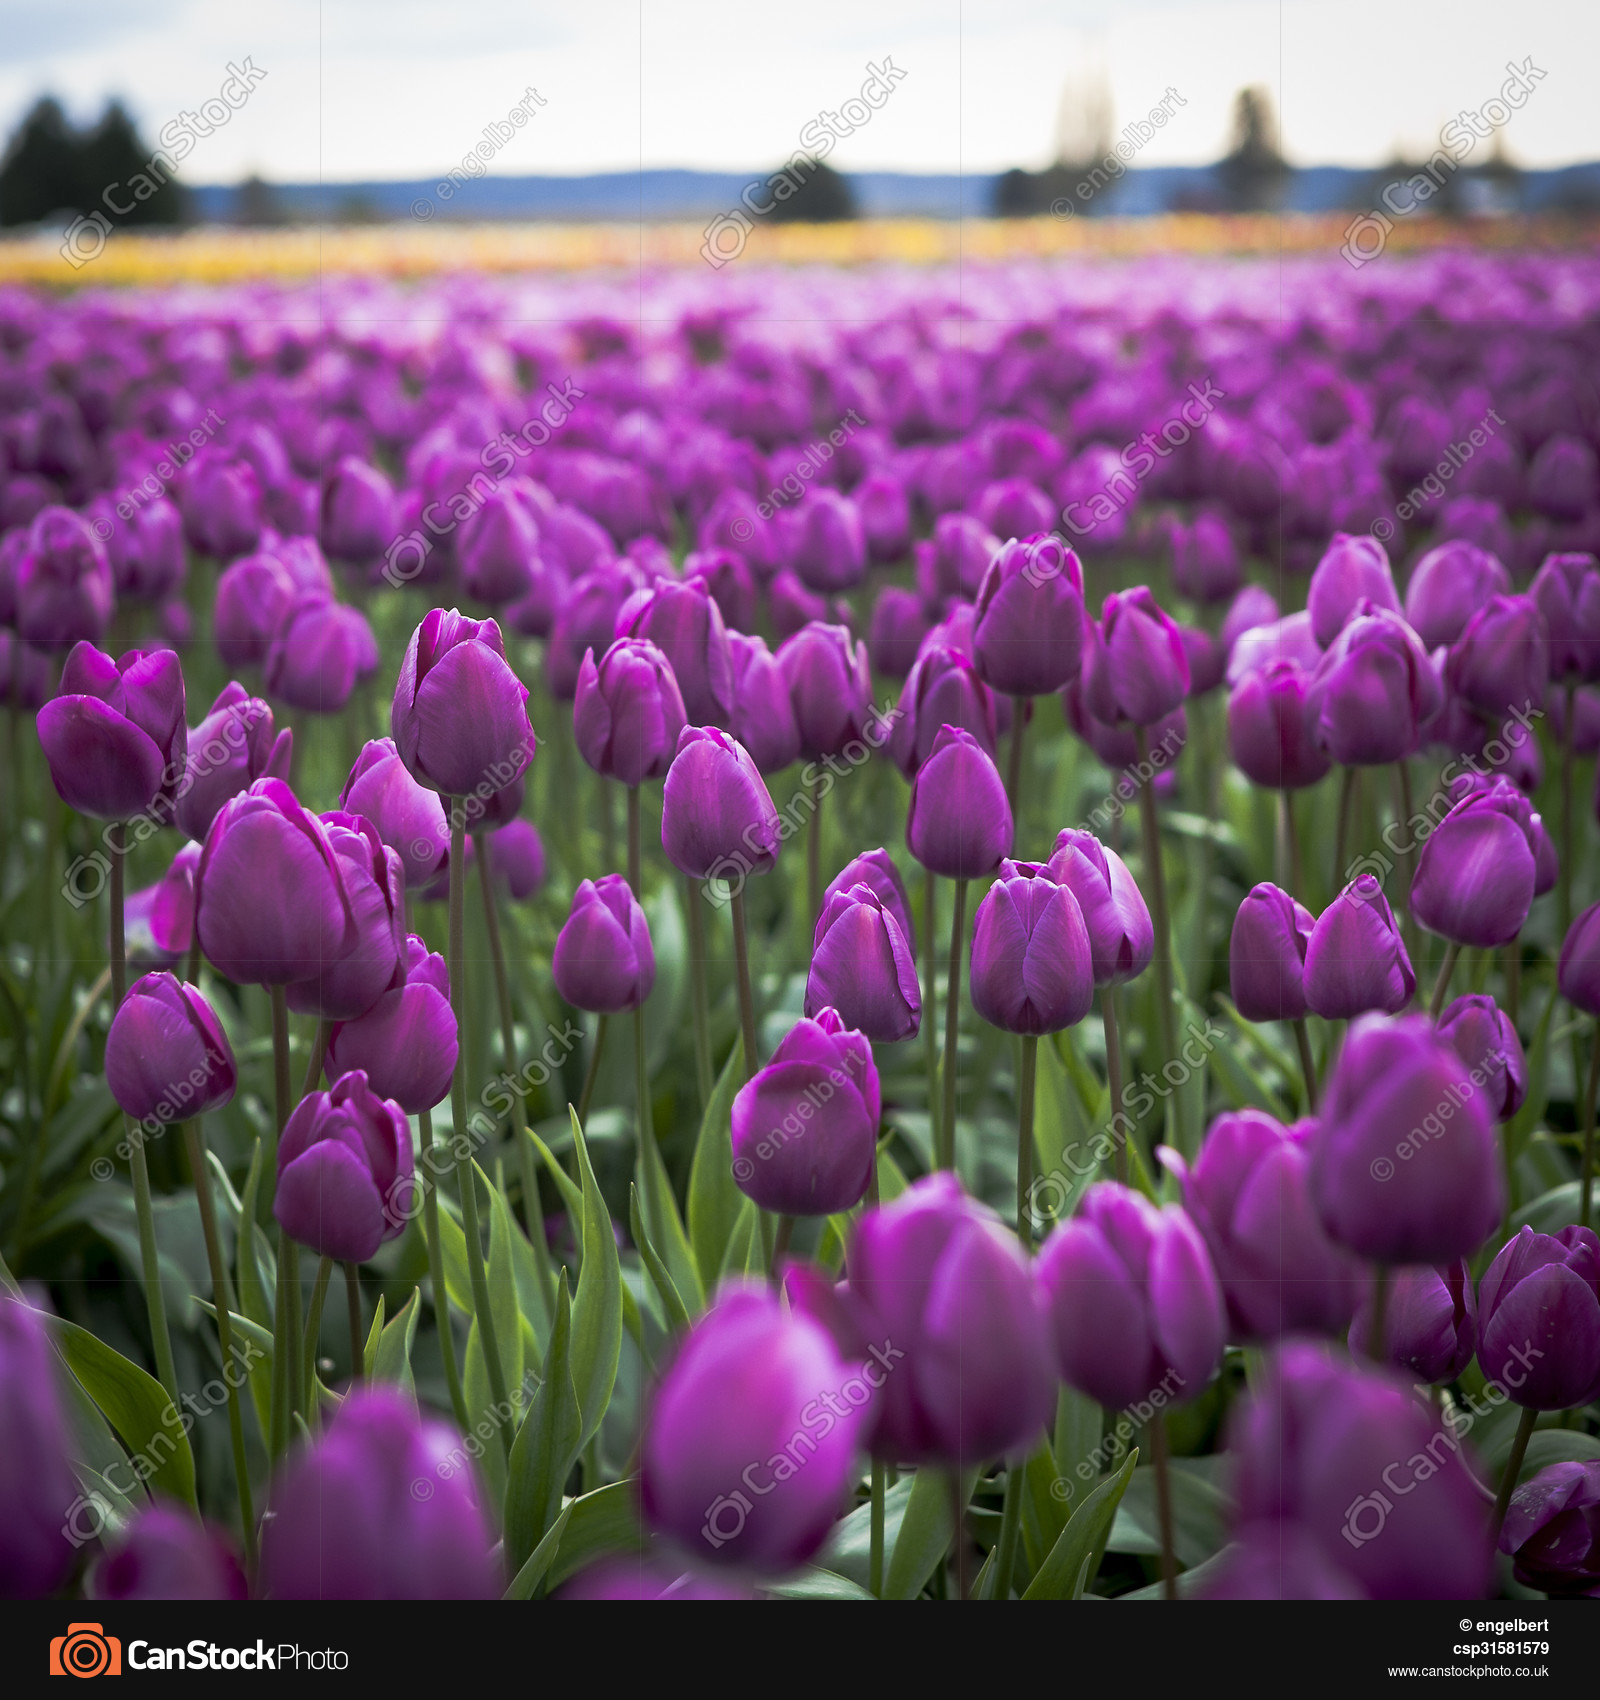 Purple tulip field. Filed of purple tulips picture - Search Photo ...